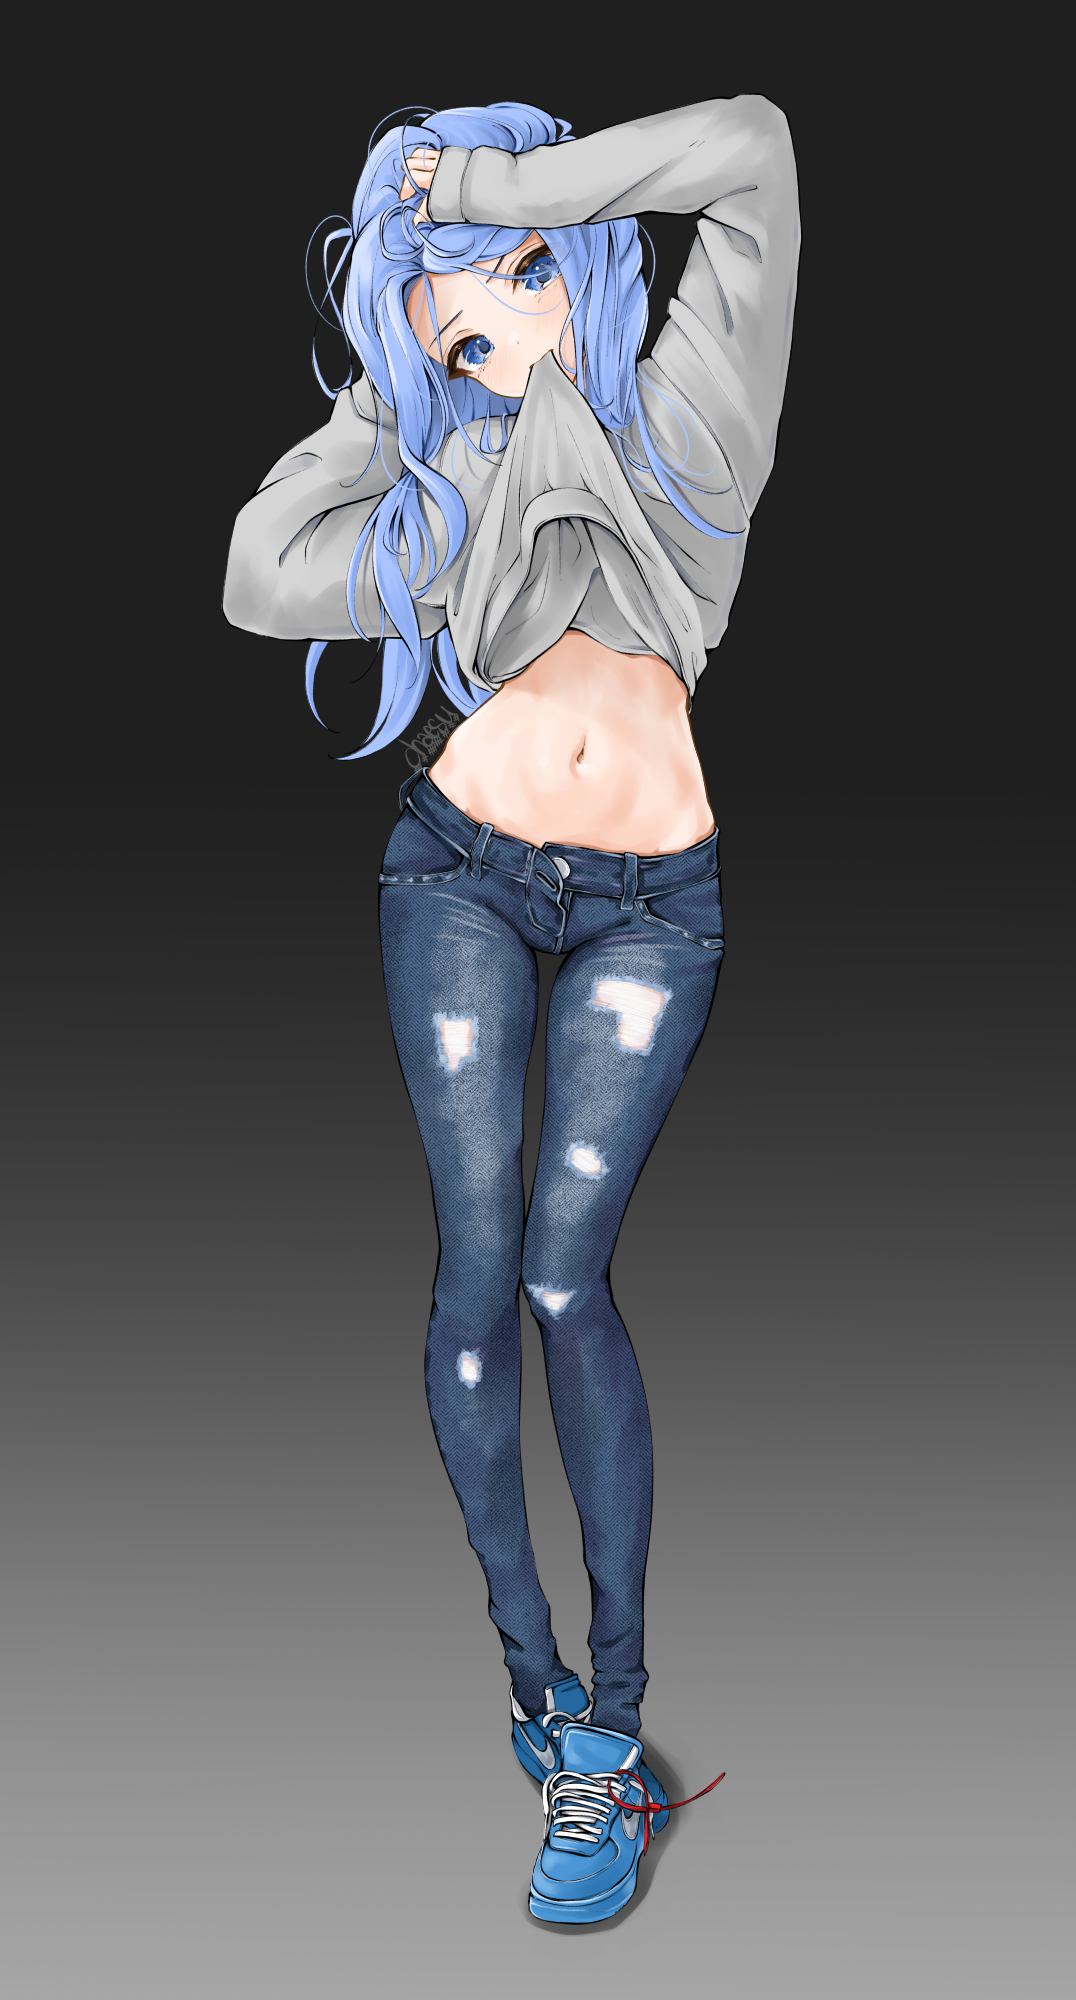 Anime 1076x2000 anime anime girls digital art artwork 2D portrait display Chaesu blue hair jeans legs shoes